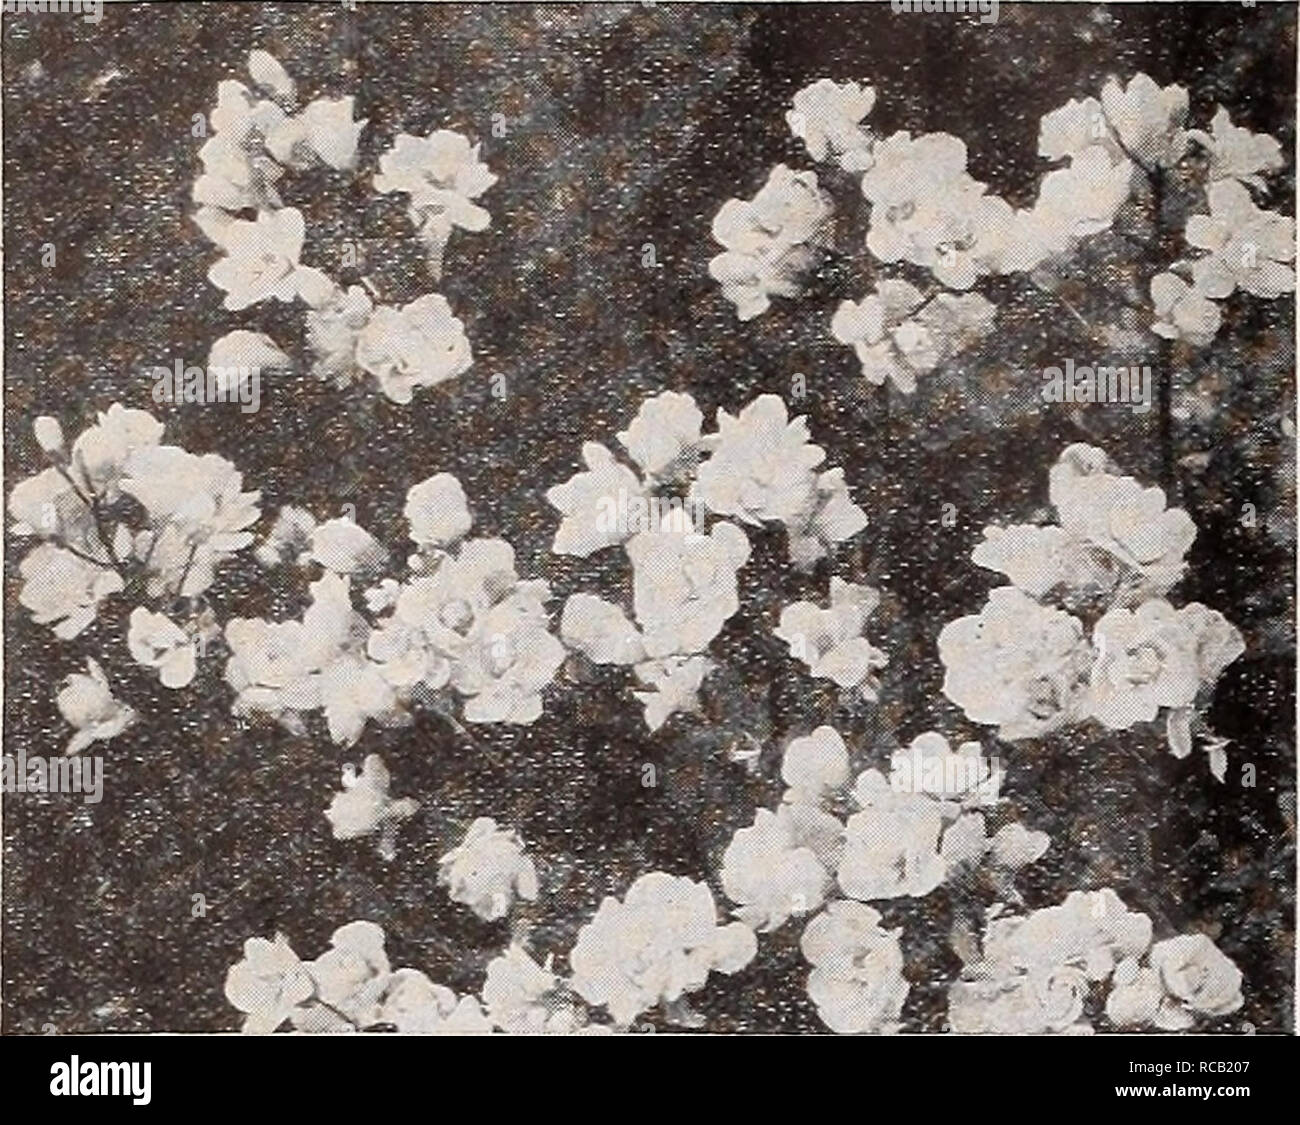 . Dreer's complete wholesale price list for florists : March 1934 edition. Bulbs (Plants) Catalogs; Vegetables Seeds Catalogs; Flowers Seeds Catalogs; Nurseries (Horticulture) Catalogs; Gardening Equipment and supplies Catalogs. 15 HENRY A. DREER Hafdy Percnmal Plants wholesale list. Arabis alpina flore plena Arabis—Rock Cress Fer doz. Alpina. Single white; 3-inch pots $1 25 — flore plena. 3-inch pots 1 50 — rosea. 3-inch pots 1 50 Arenaria—Sandwort Montana. 3-inch pots Verna caespitosa. 3-inch pots. Per 100 $10 00 12 00 12 00 12 00 10 00 3 50 25 00 1 50 12 00 1 25 10 00 1 25 10 00 Armeria—Thr Stock Photo